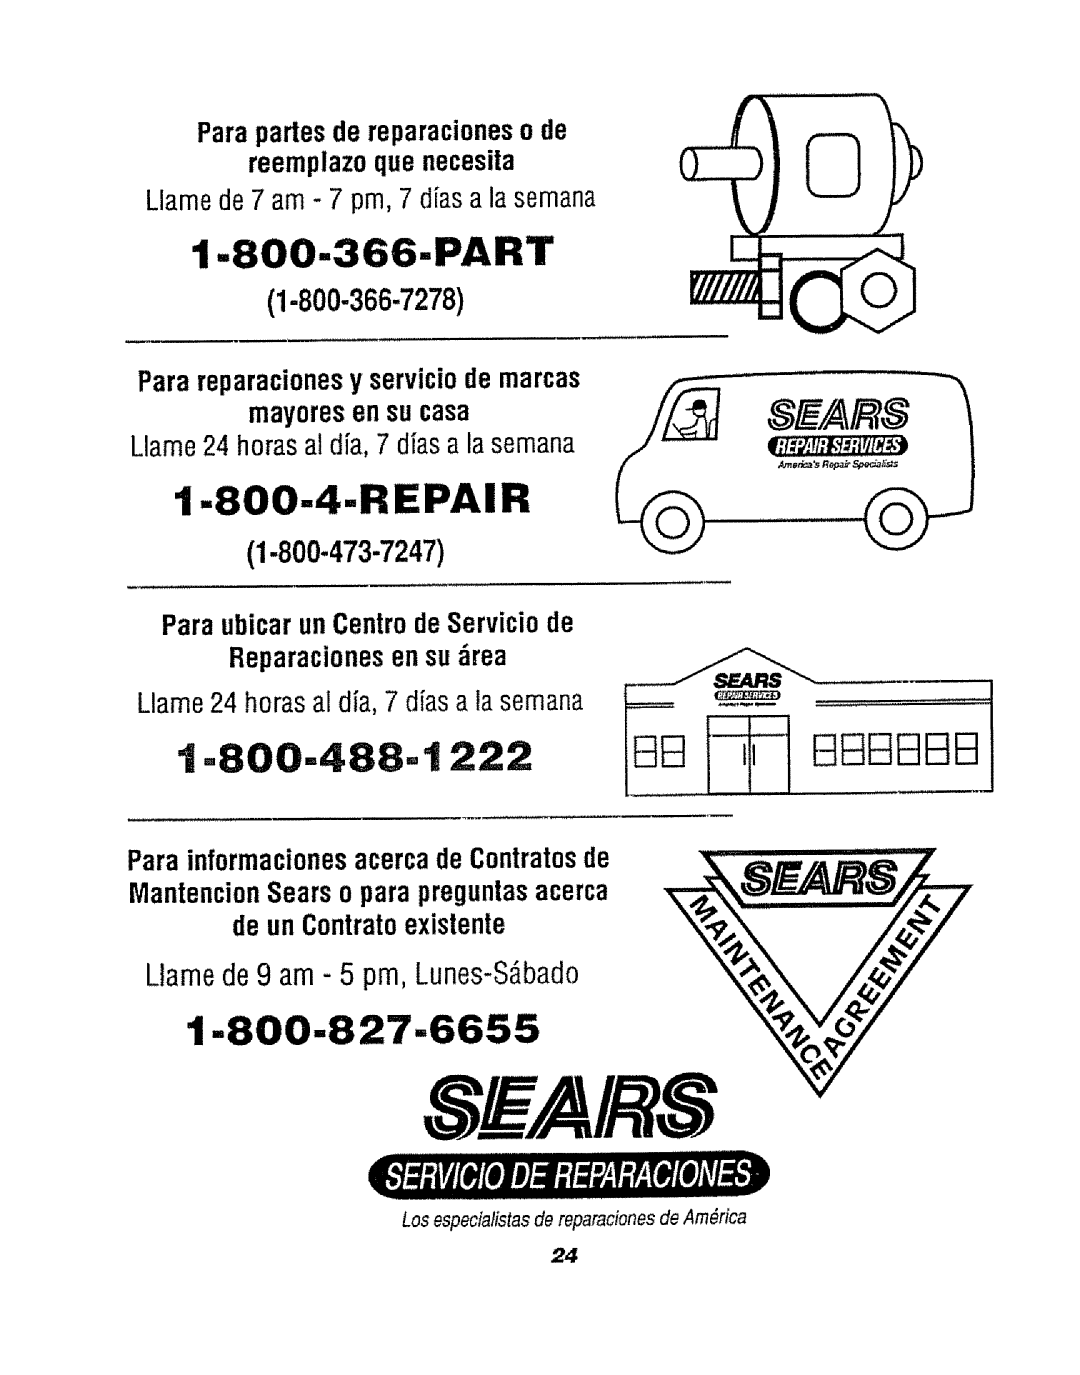 Sears 911.47469 Repair, 1.,800-488, 1-800-366-7278, ParaubicarunCentrodeServiciode, Reparacionesensu_rea, S Ai S, Part 